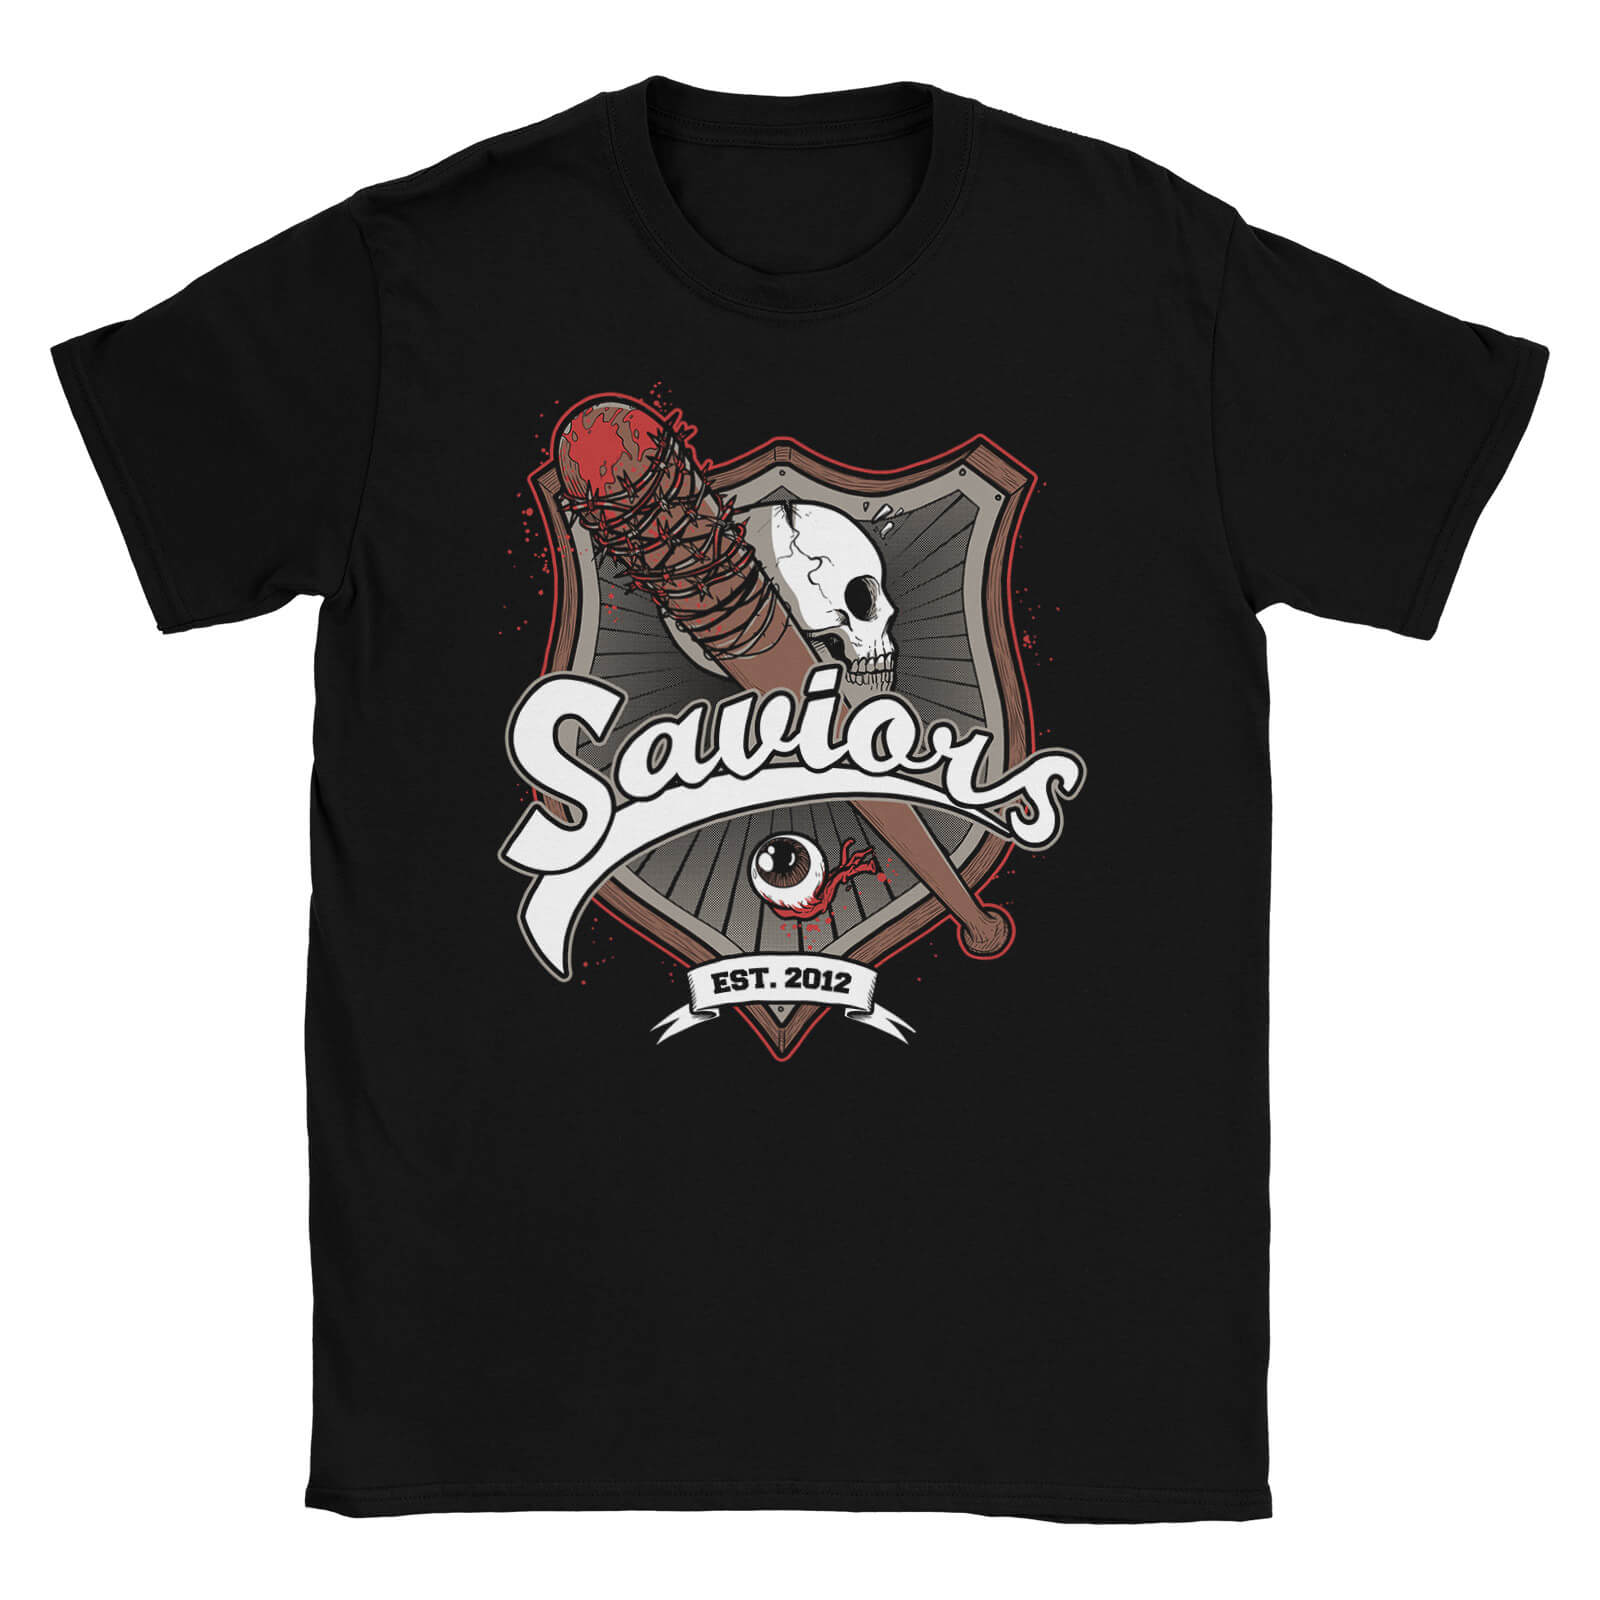 ZBOX T-Shirt Homme Saviors - Noir - Unisex - M